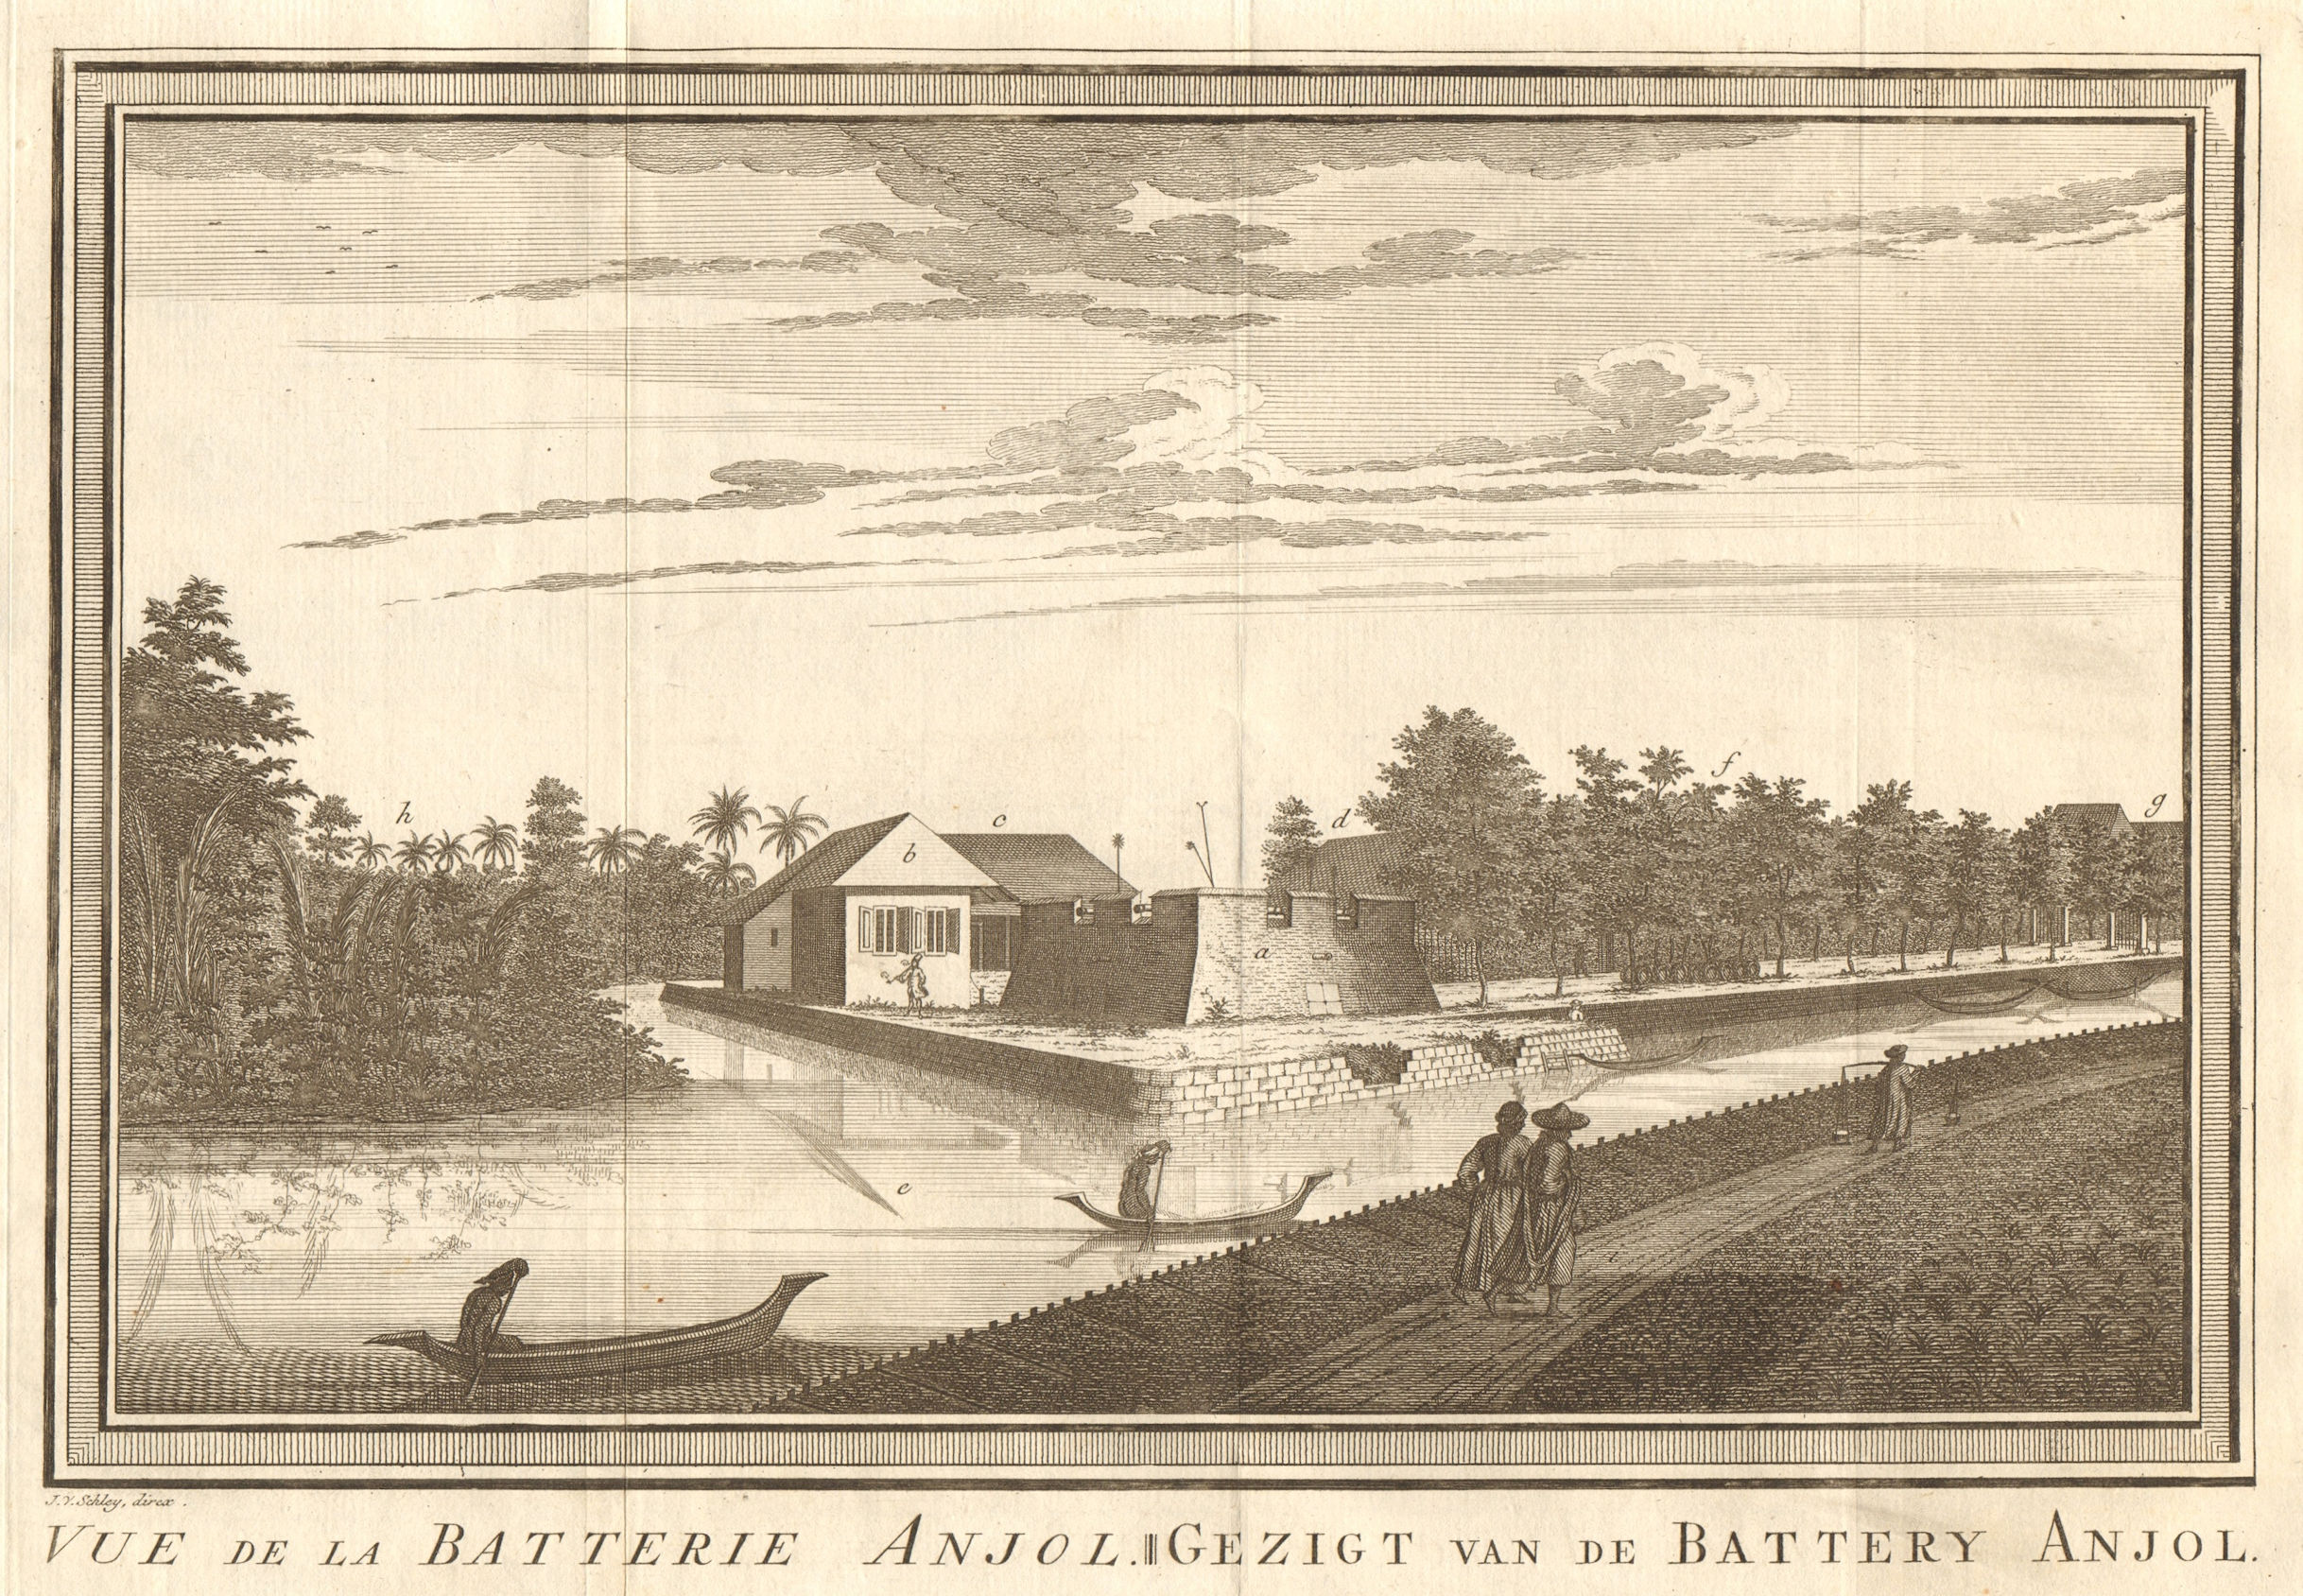 Associate Product 'Vue de la Batterie Anjol'. Fort Ancol battery, Batavia. Jakarta. SCHLEY 1763